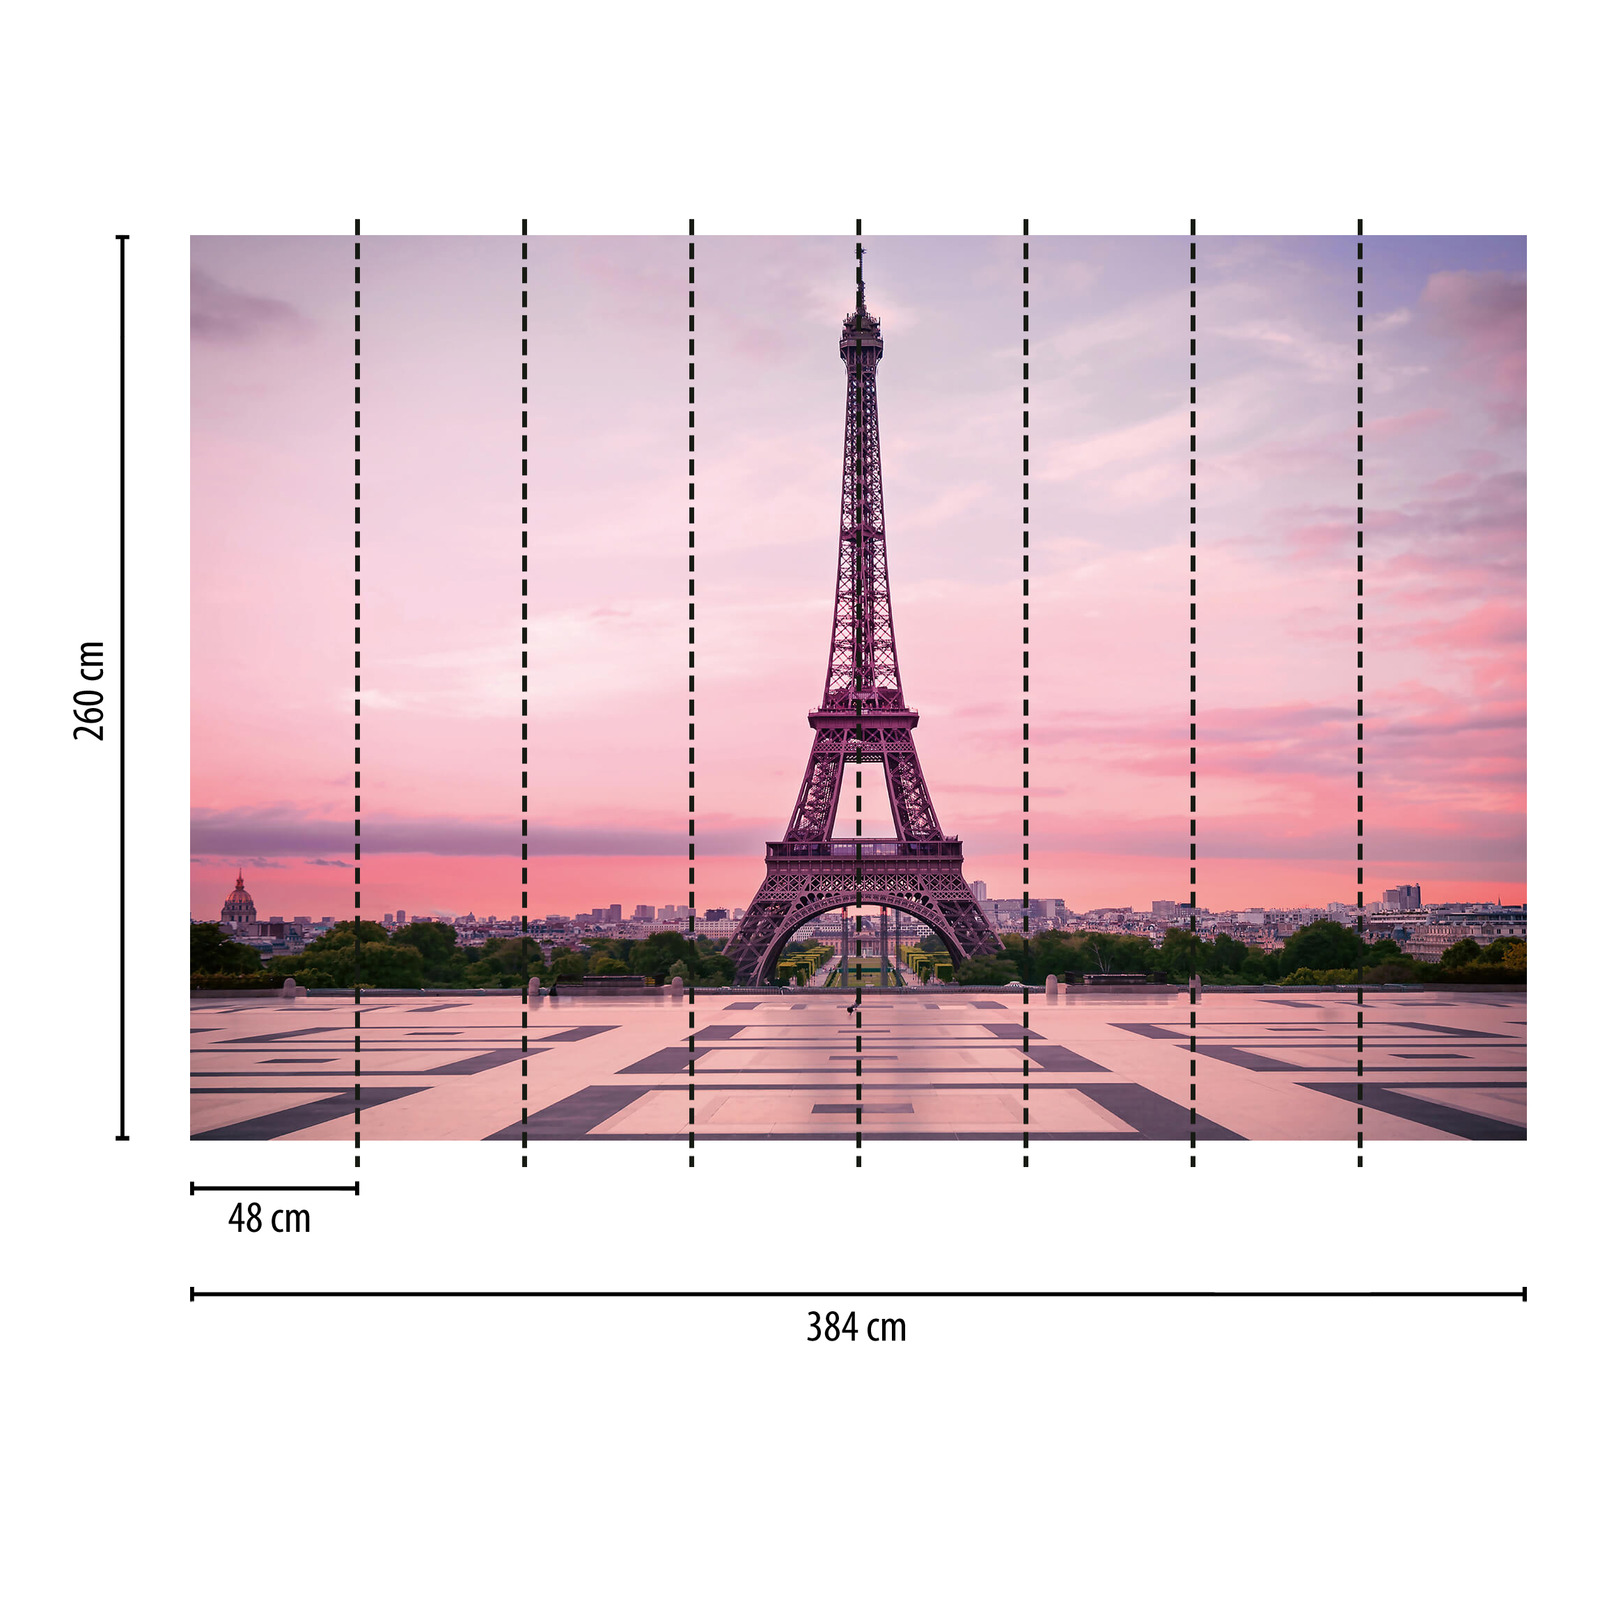             Fototapete Eiffelturm Paris bei Sonnenuntergang
        